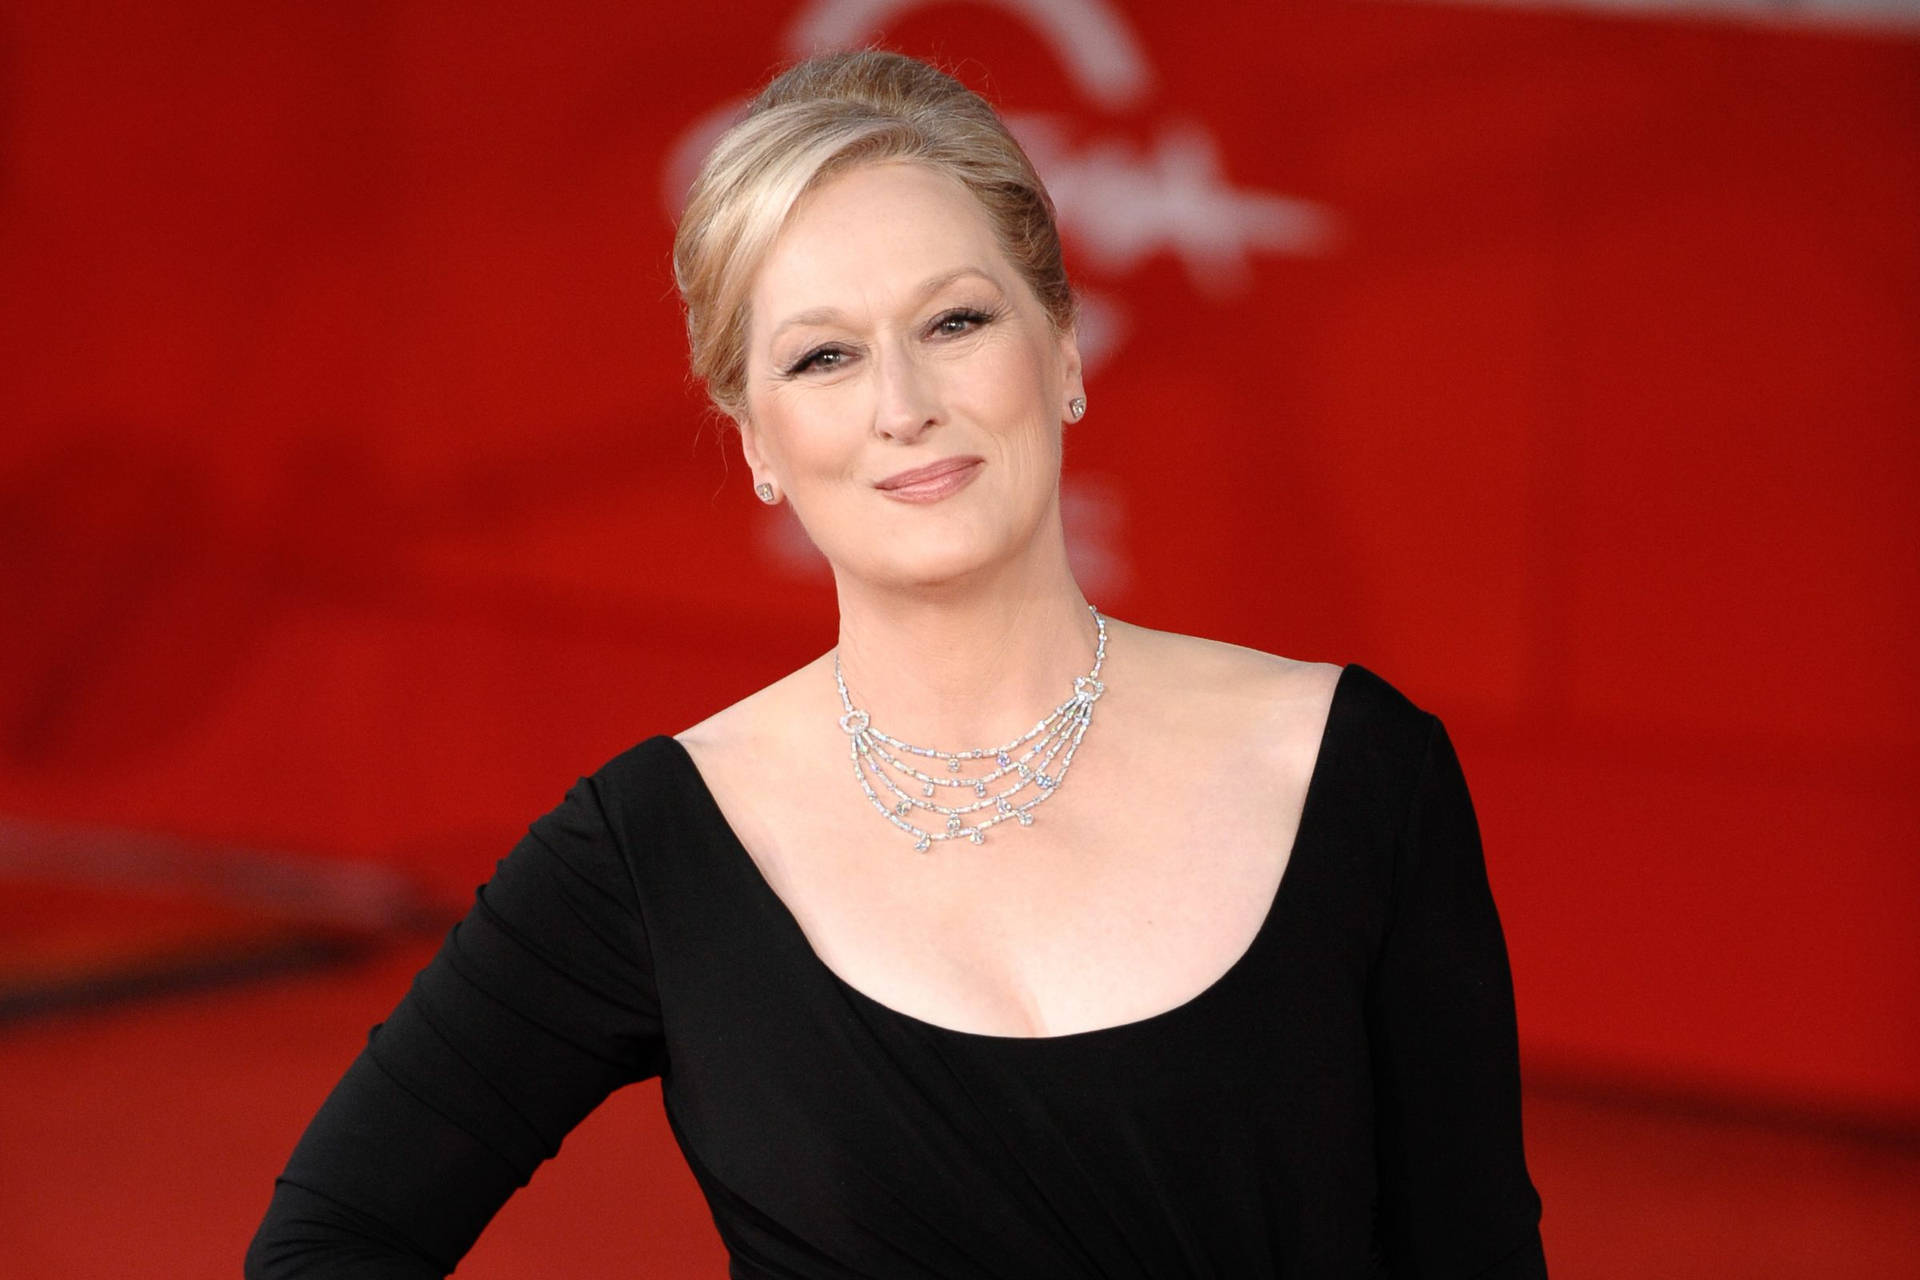 Meryl Streep On A Red Backdrop Wallpaper